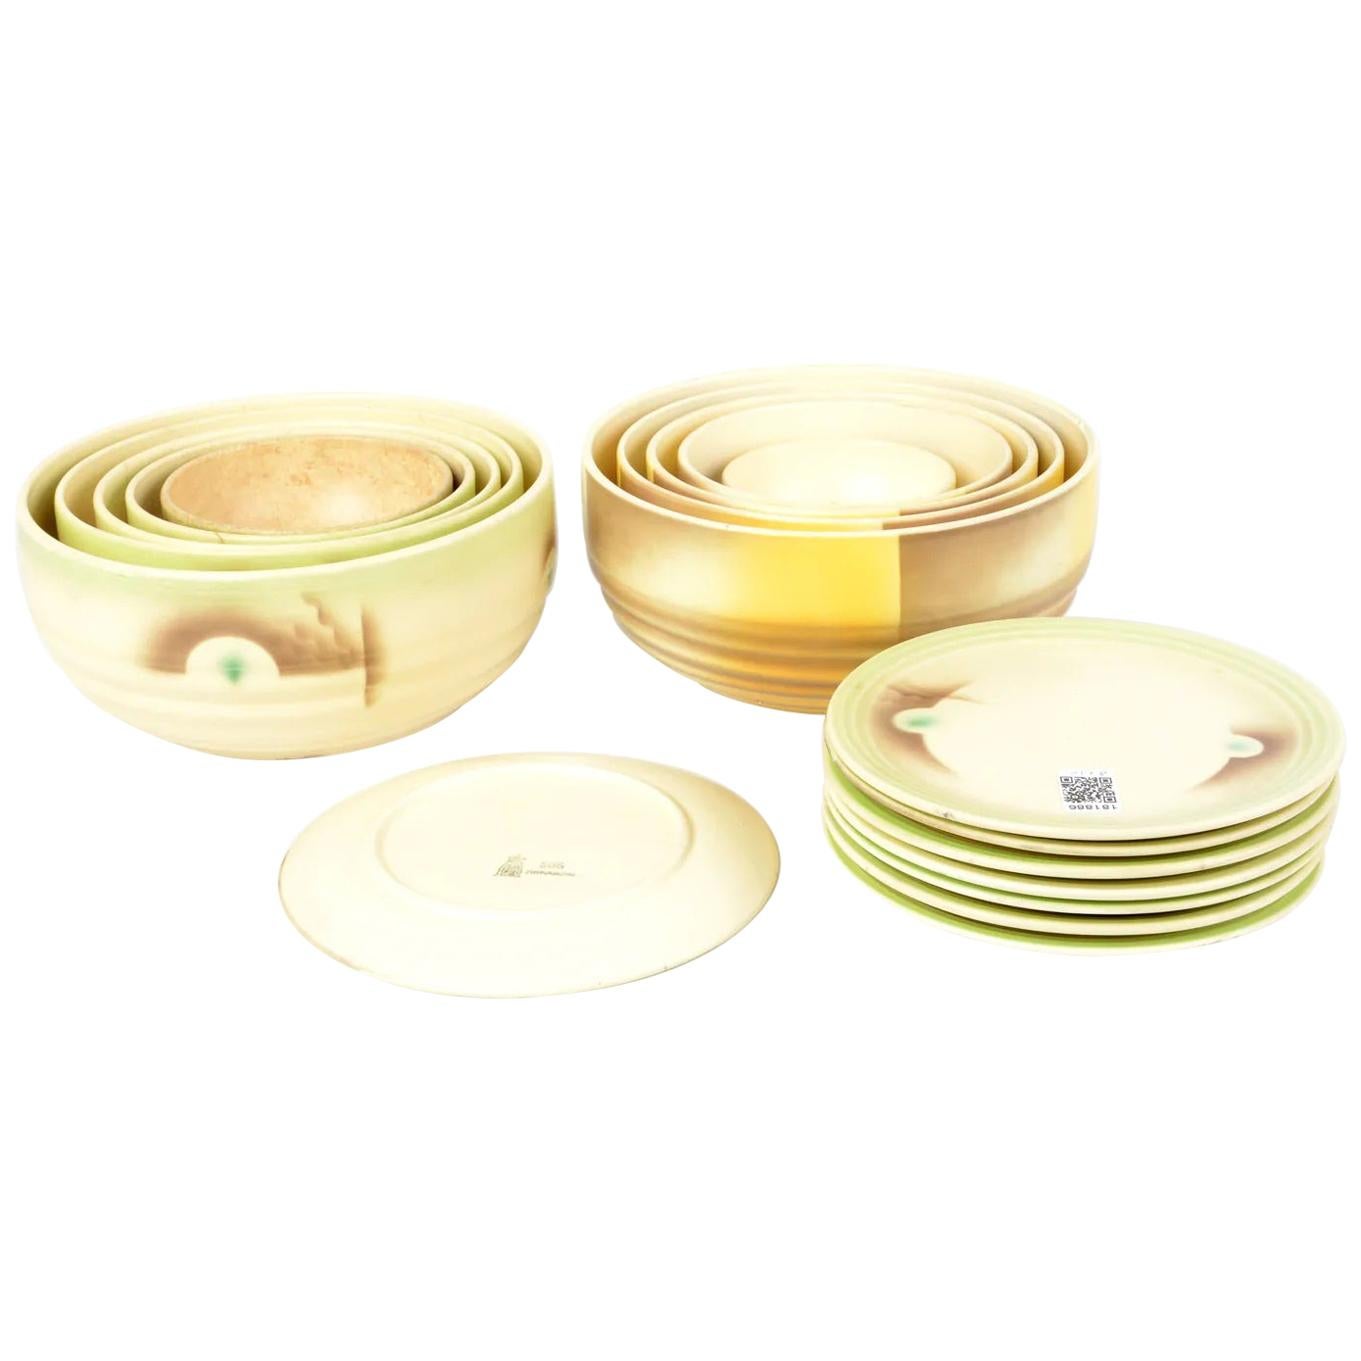 Set Antique / Vintage German Art Deco Ceramic Bowls Plates 1920-1930 Esterwalda